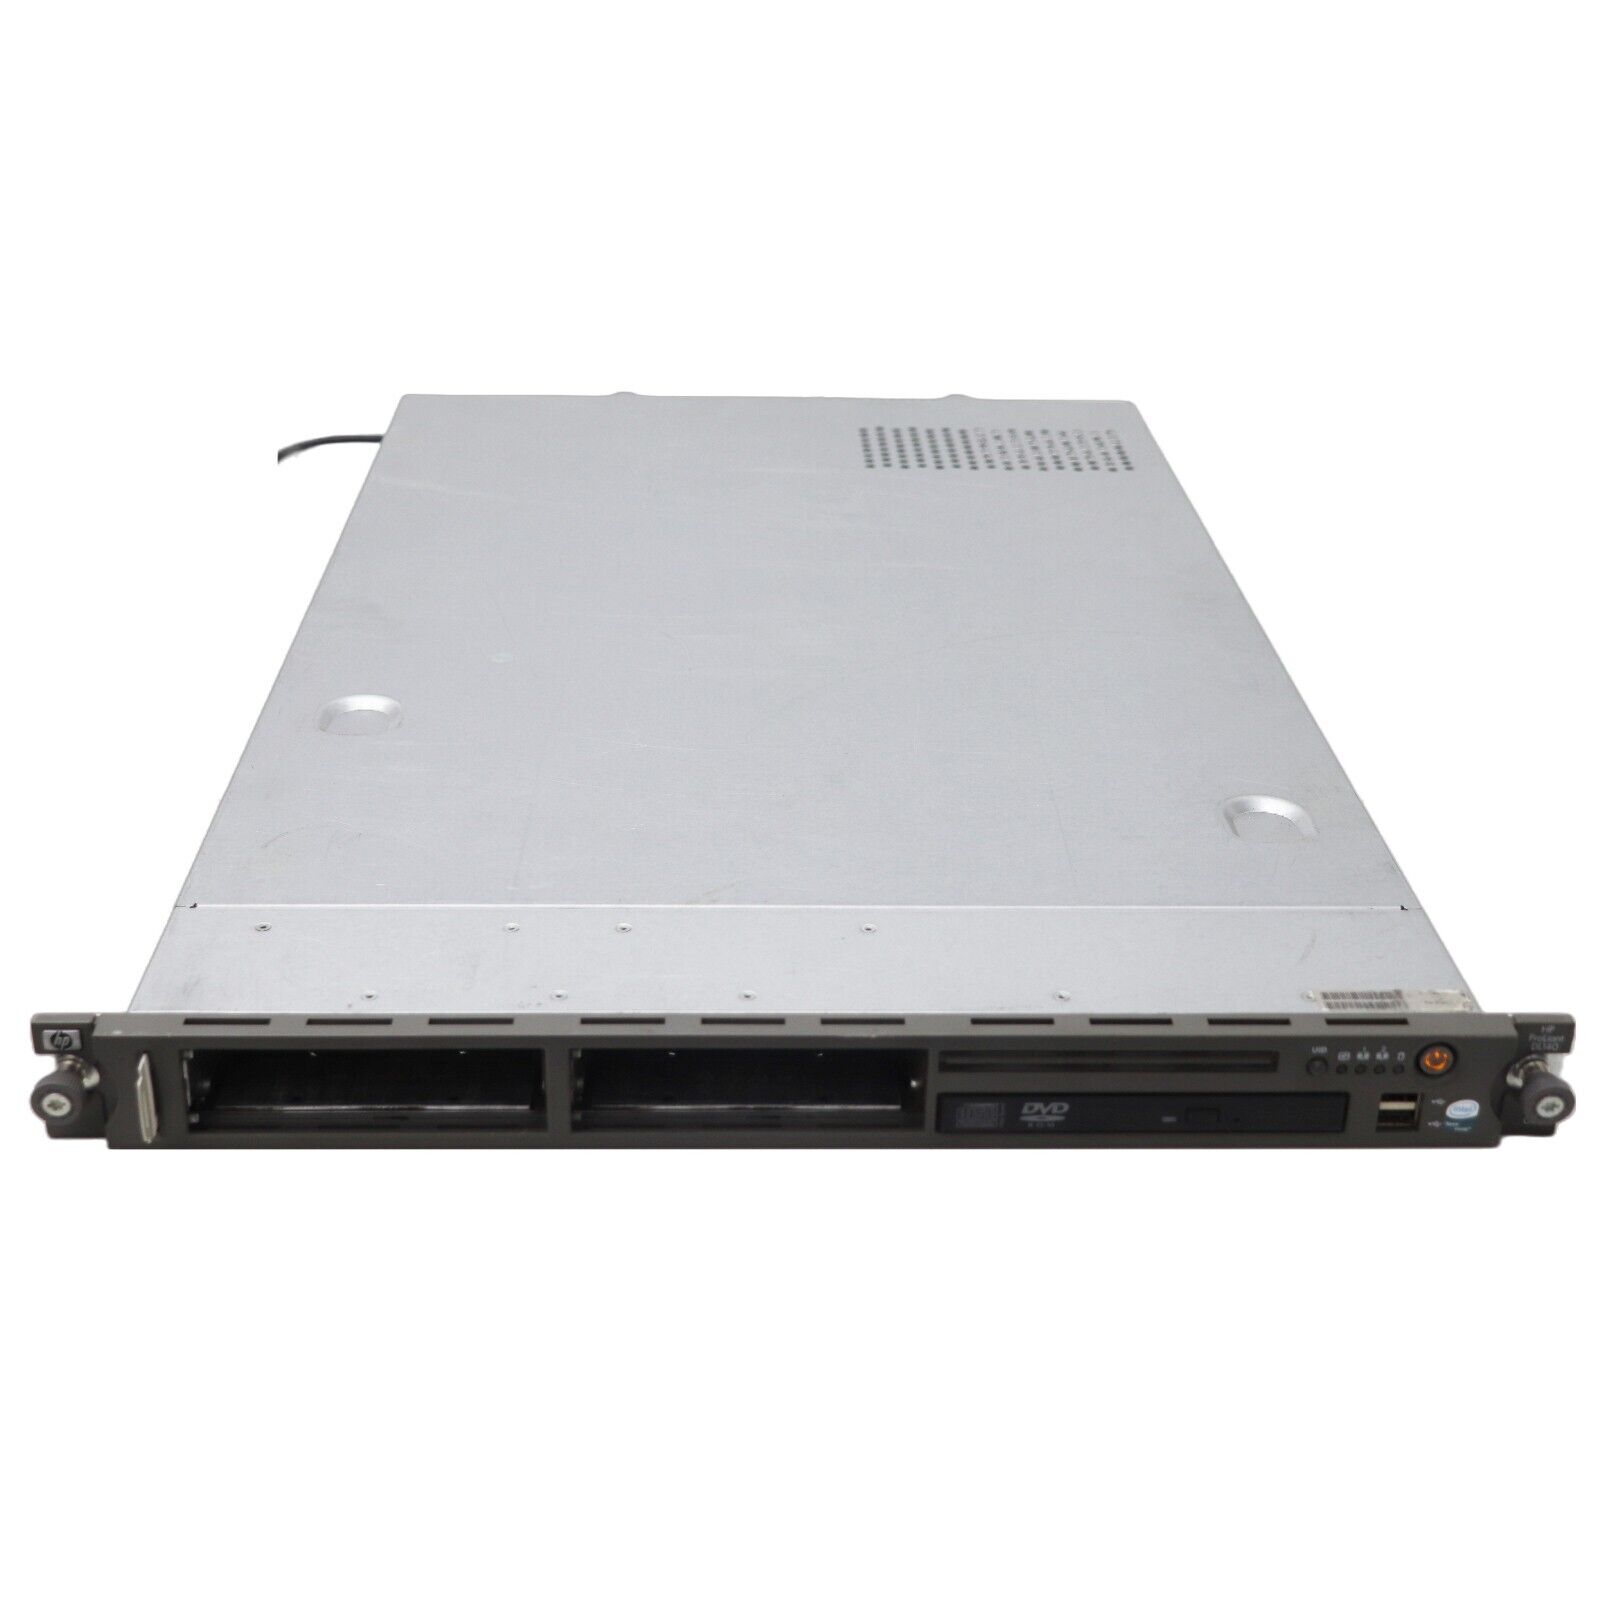 HP Proliant DL140 G3 Server Quad Core 2GB Ram